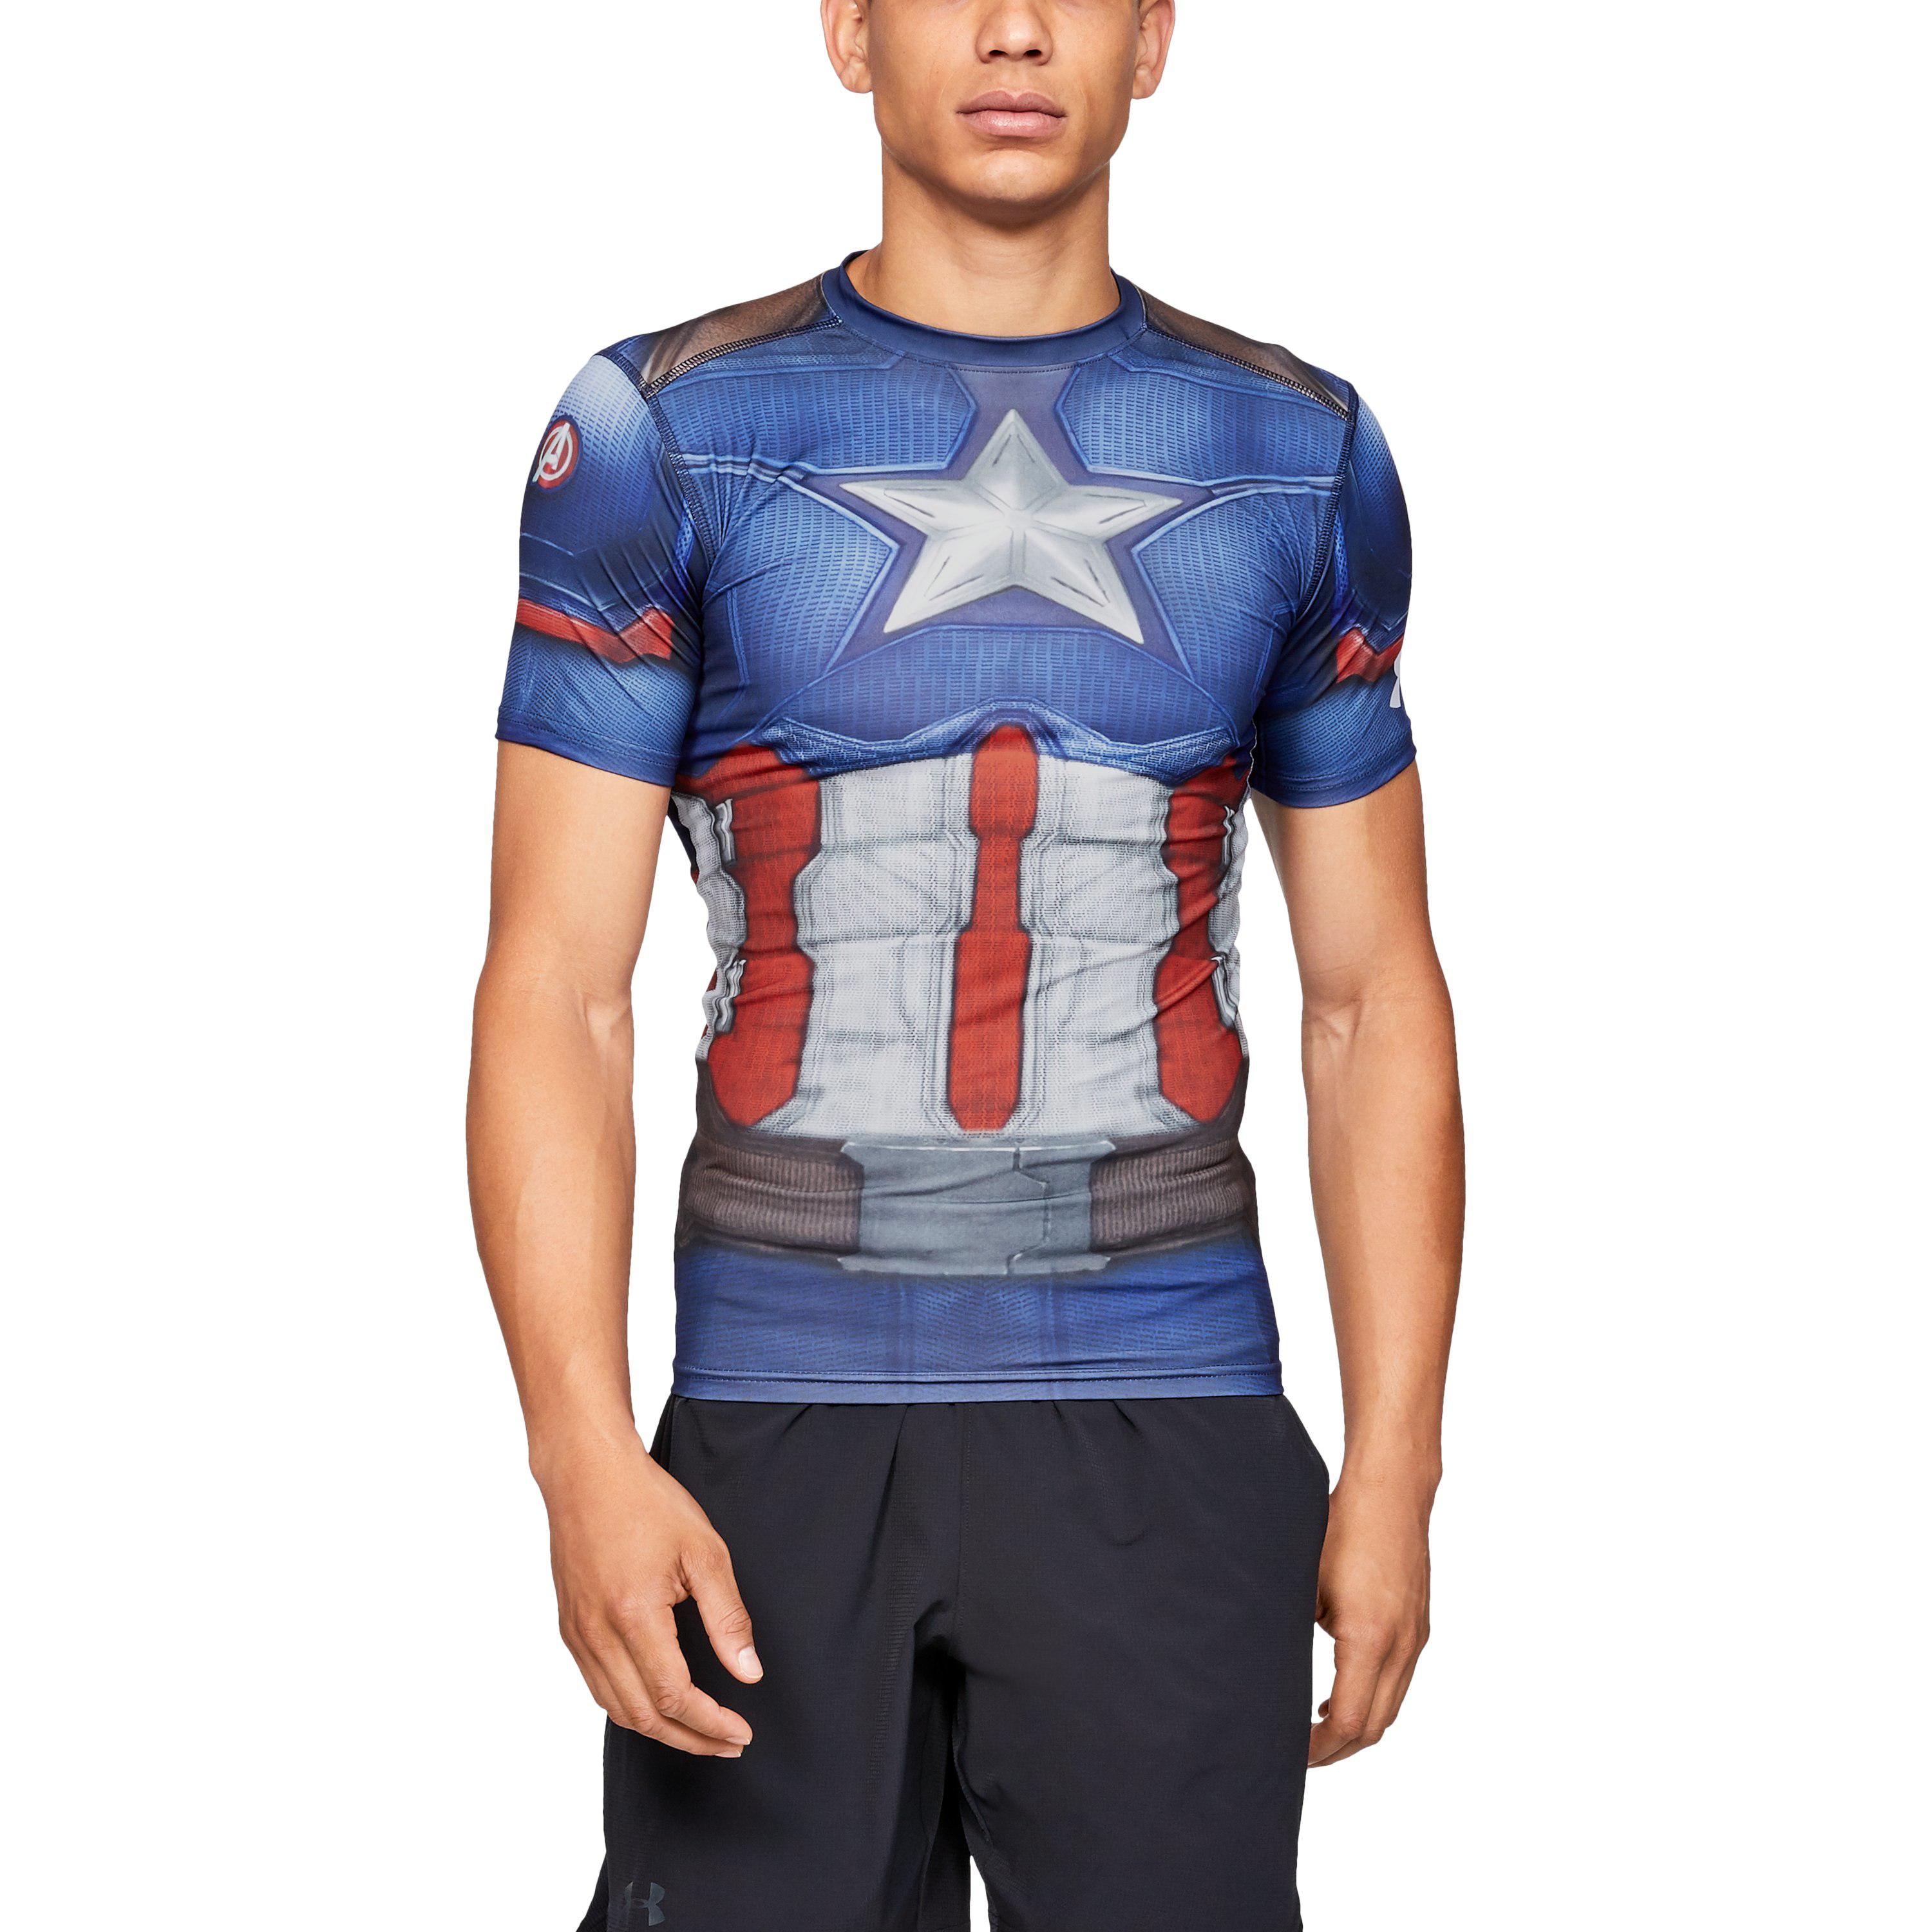 Distribuir perecer mentiroso Under Armour Men's ® Alter Ego Captain America Compression Shirt for Men |  Lyst